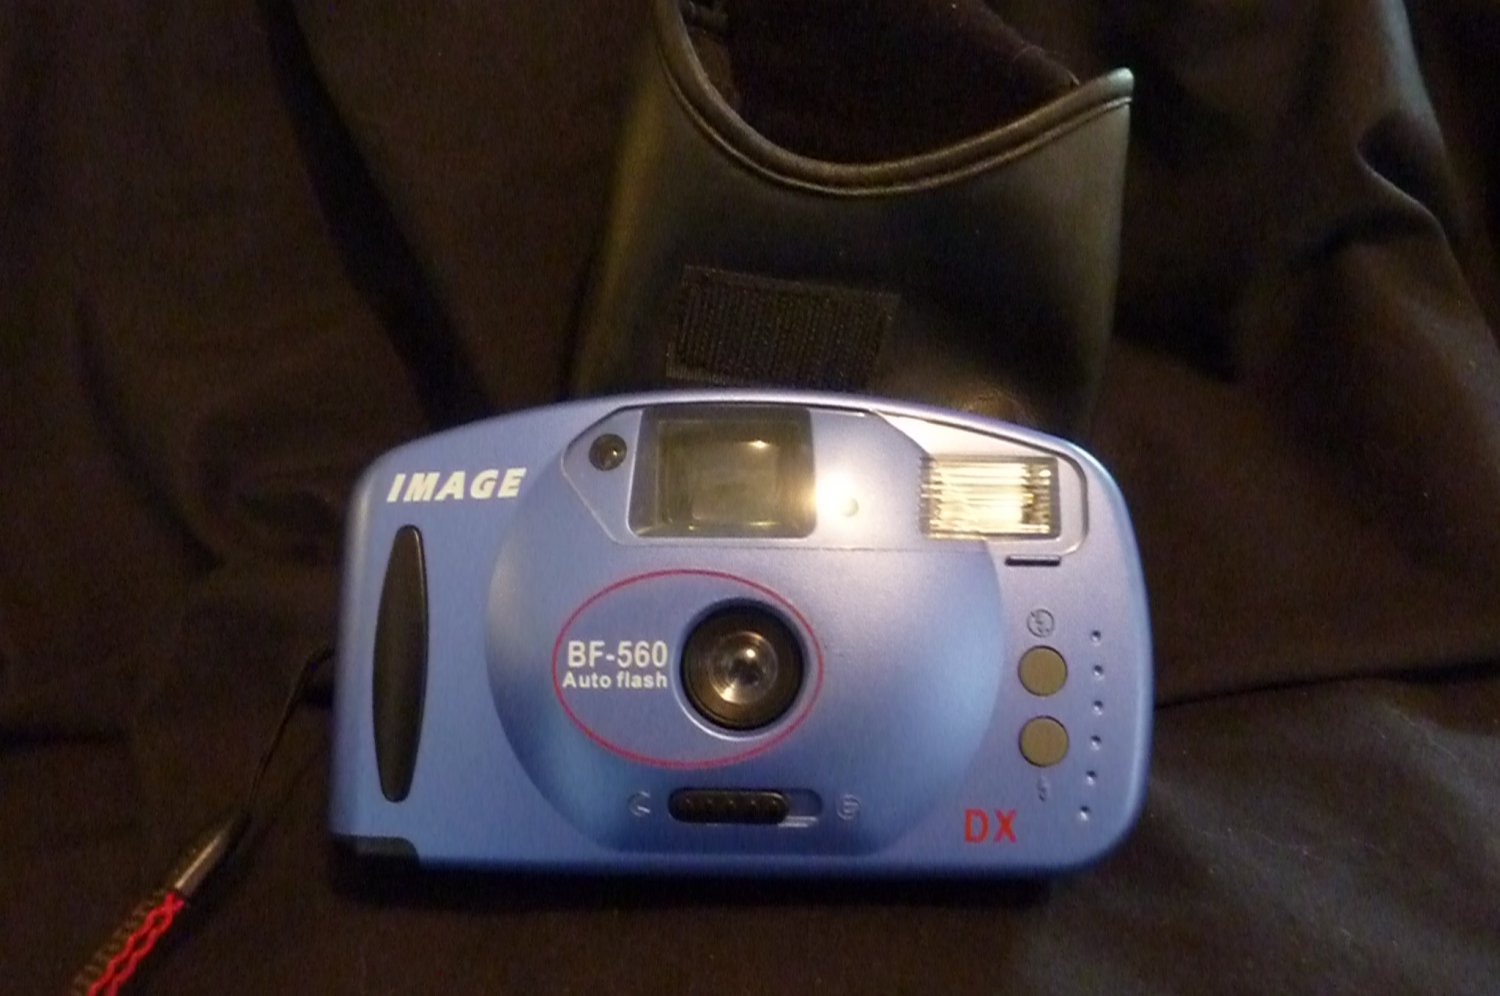 Image BF-560 Auto Flash 35mm Camera - Blue